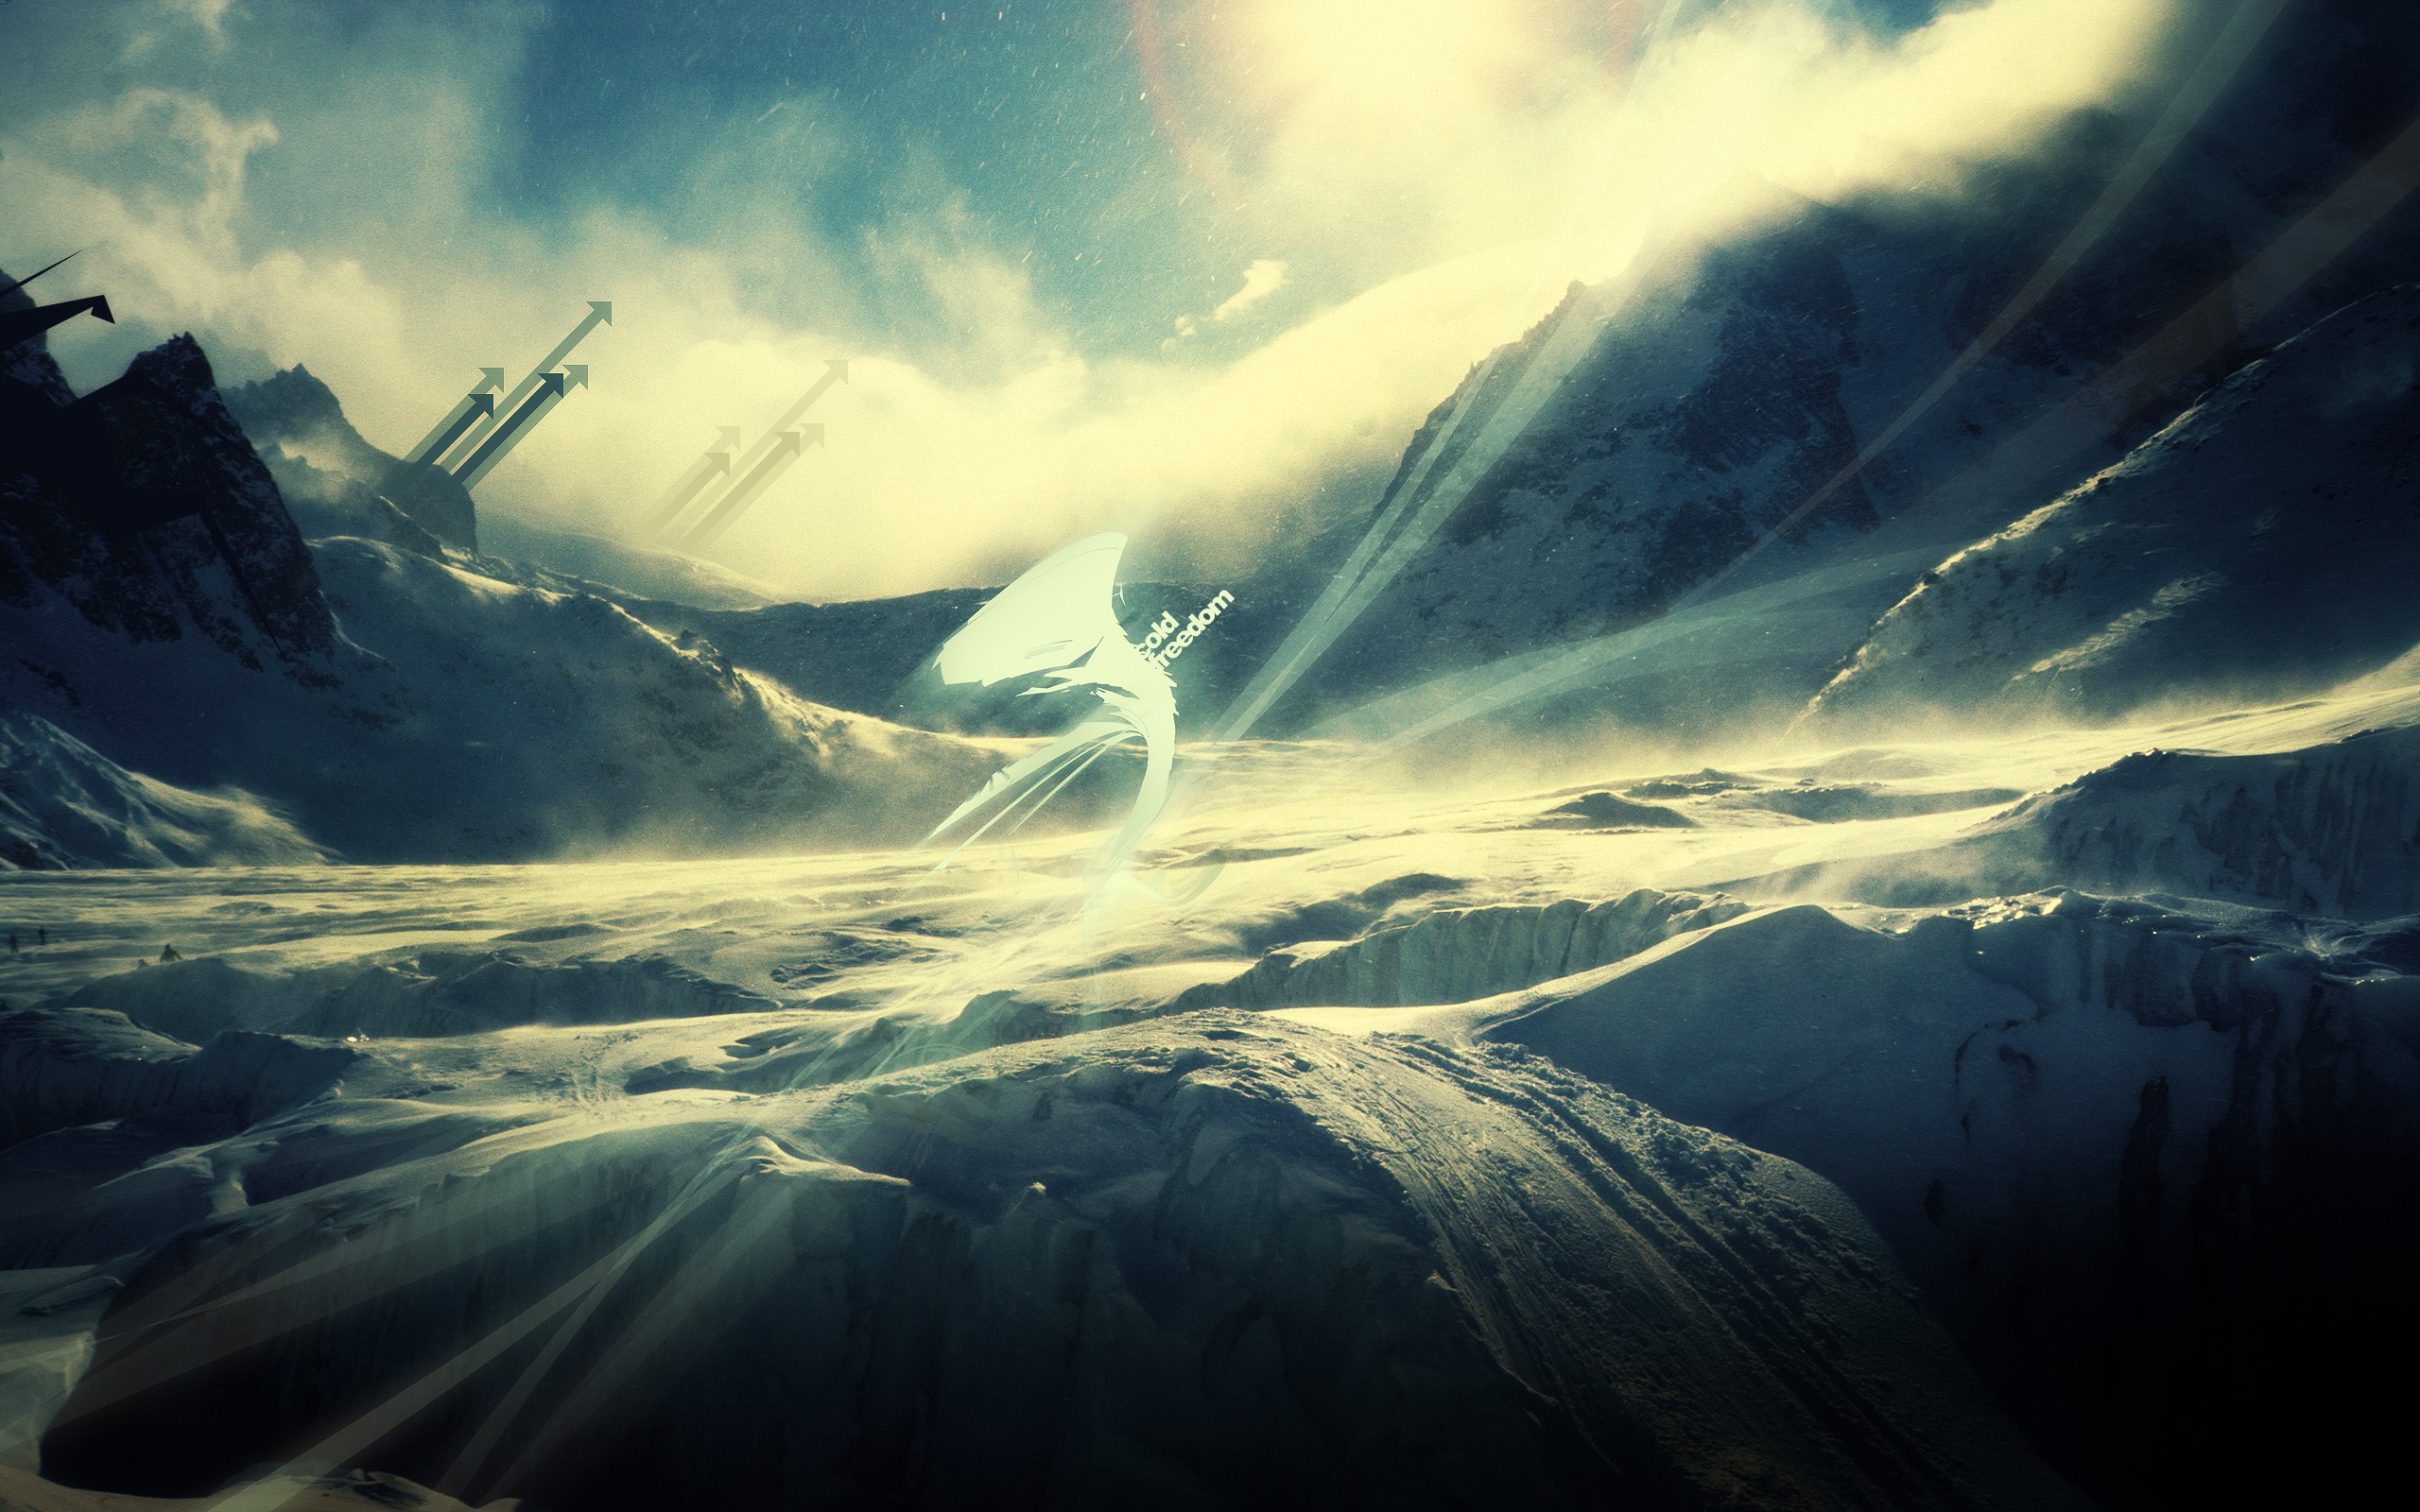 General 2560x1600 digital art arrow (design) landscape nature ice mountains sunlight